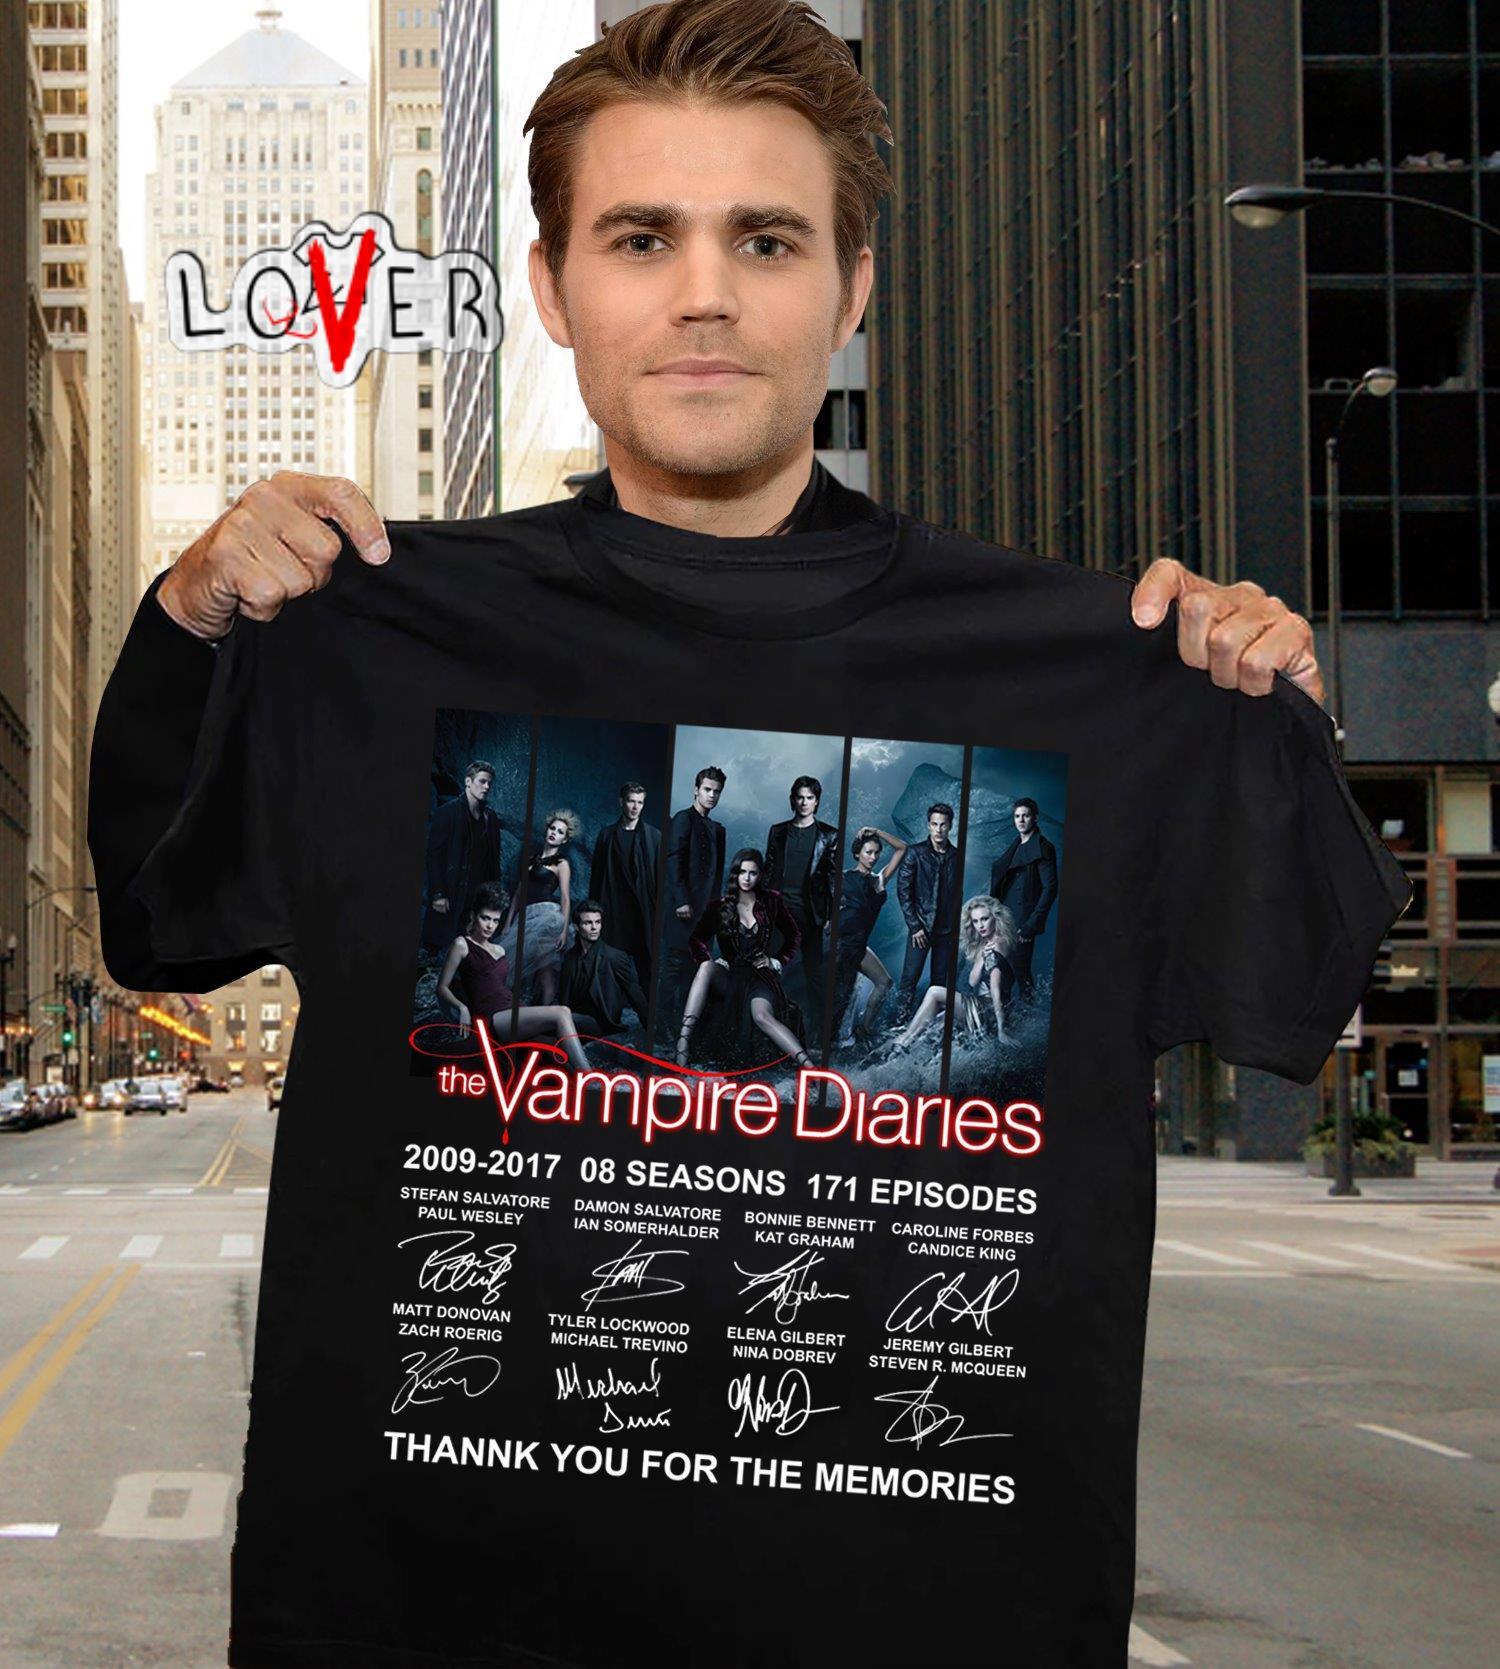 Formode kaste støv i øjnene Brace Vampire Diaries Collector's edition - Tee-shirt with actors' signatures  VPD0109 | Vampire Diaries Merch